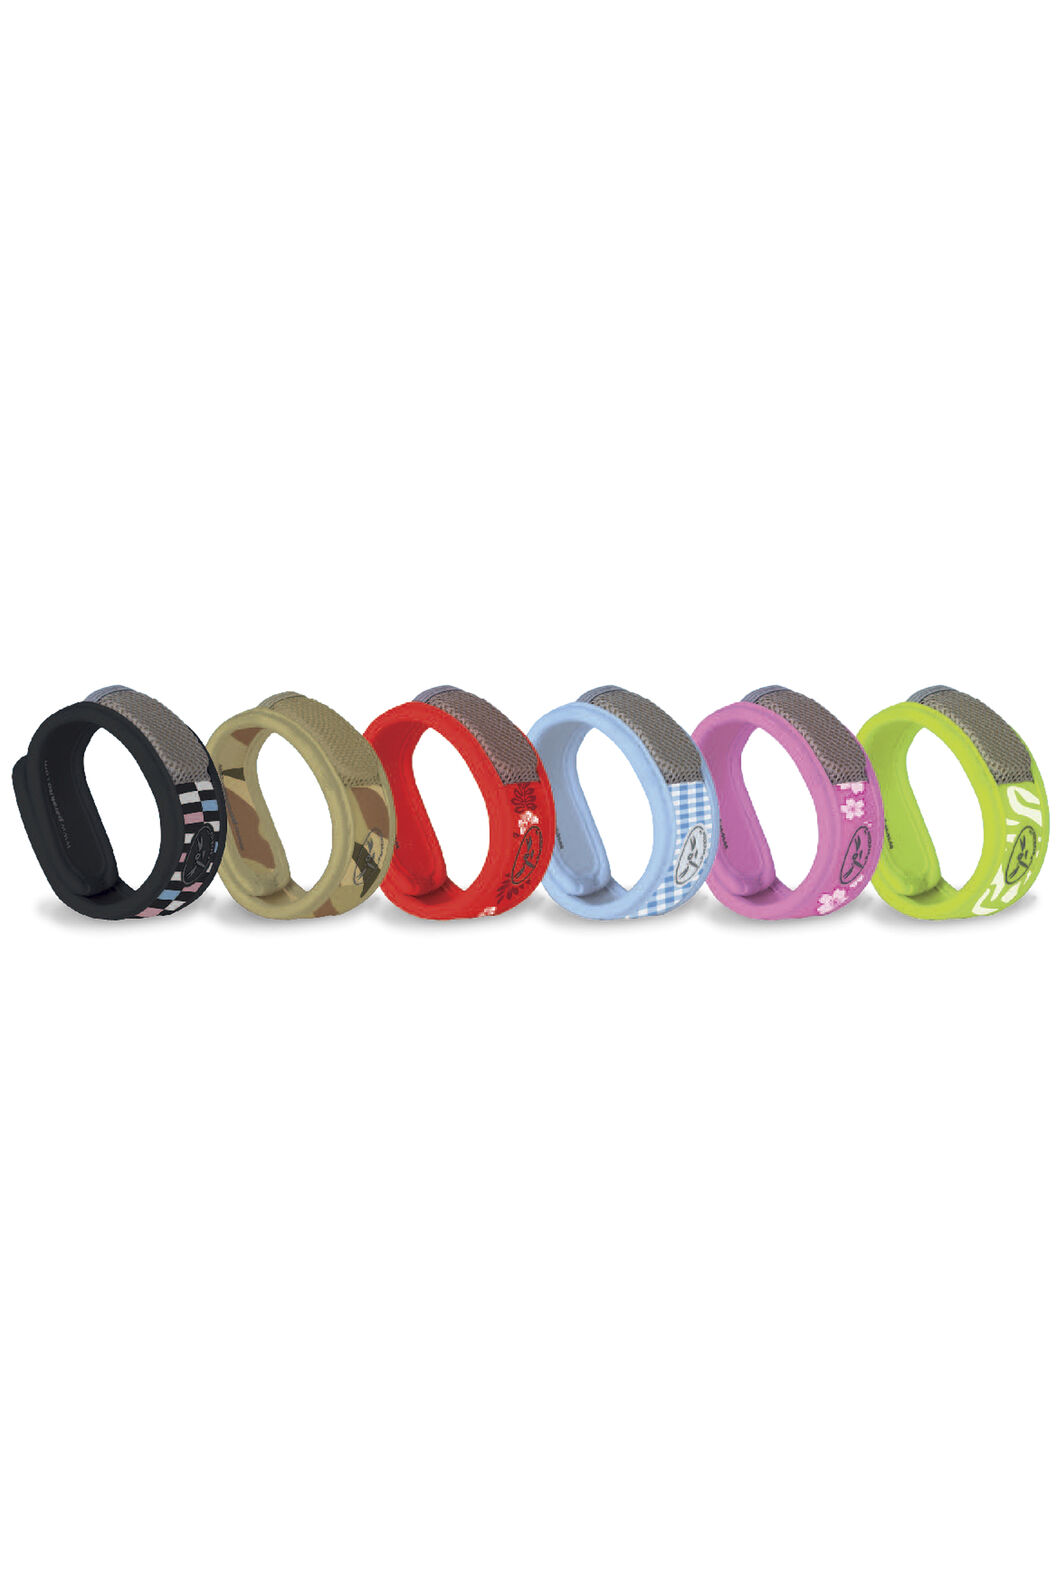 Para’Kito™ Wristband, Assorted, hi-res